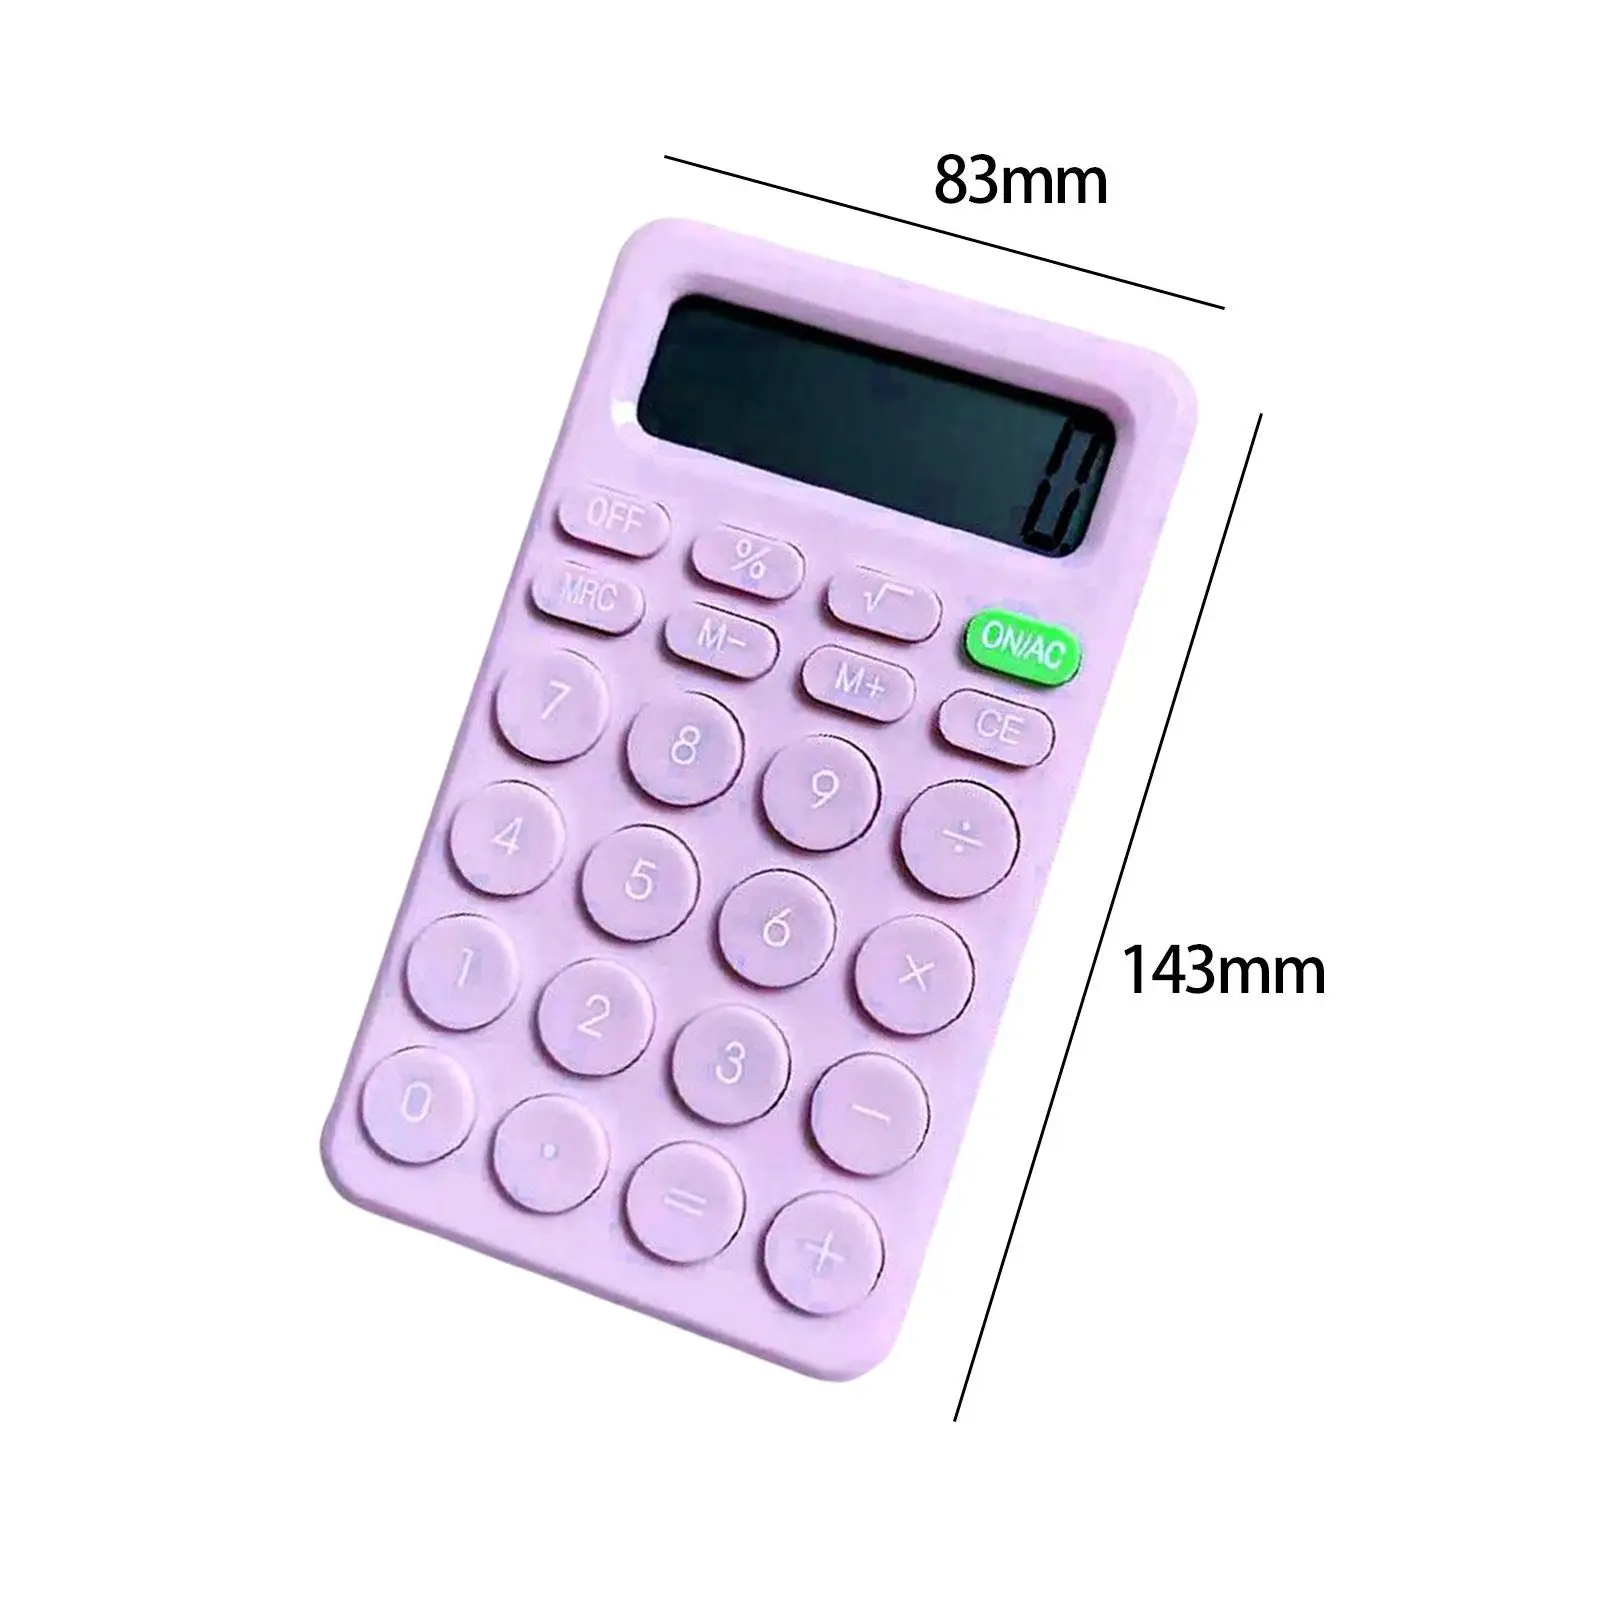 Basic Calculator Pocket Size Portable 8 Digit Easy to Read LCD Display Desktop Calculator Desk Calculator for Office Kids